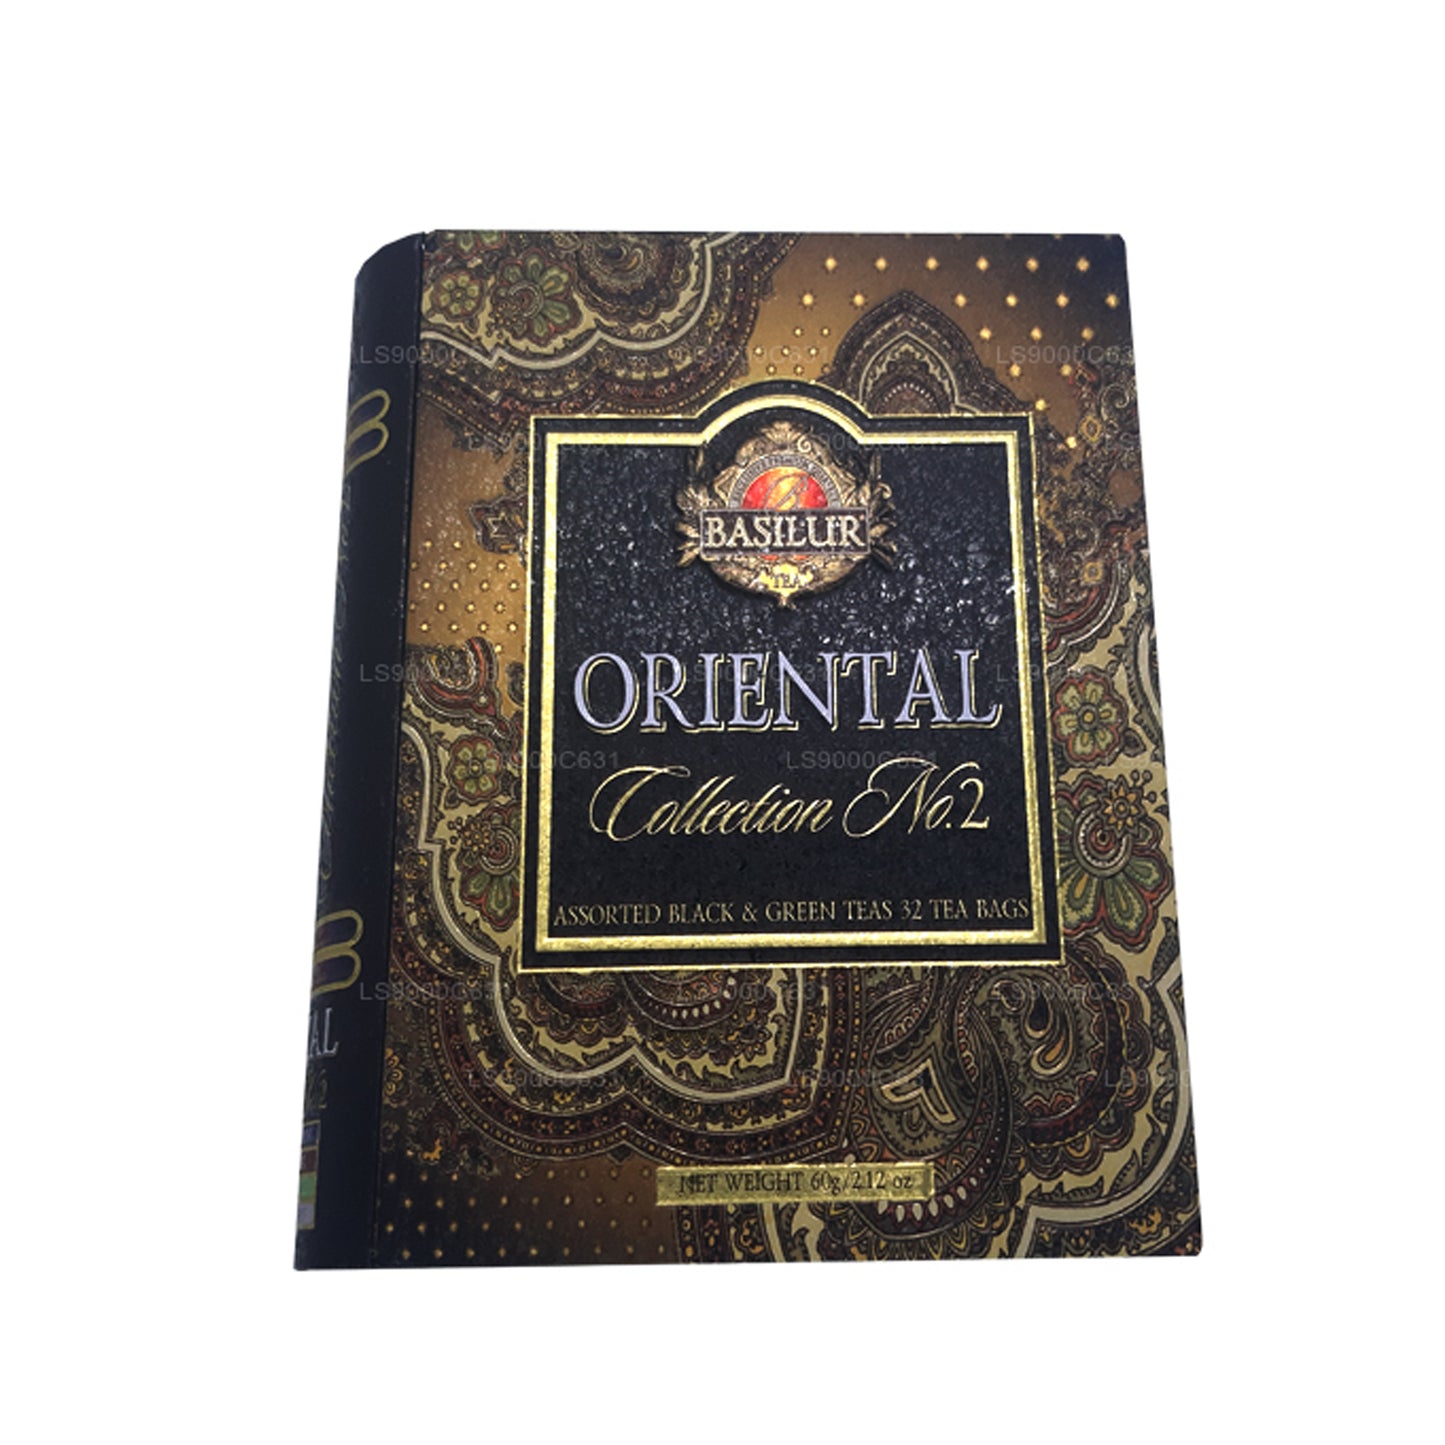 Basilur Oriental Collection Čajová kniha Vol.2 (60g) 32 čajových sáčků